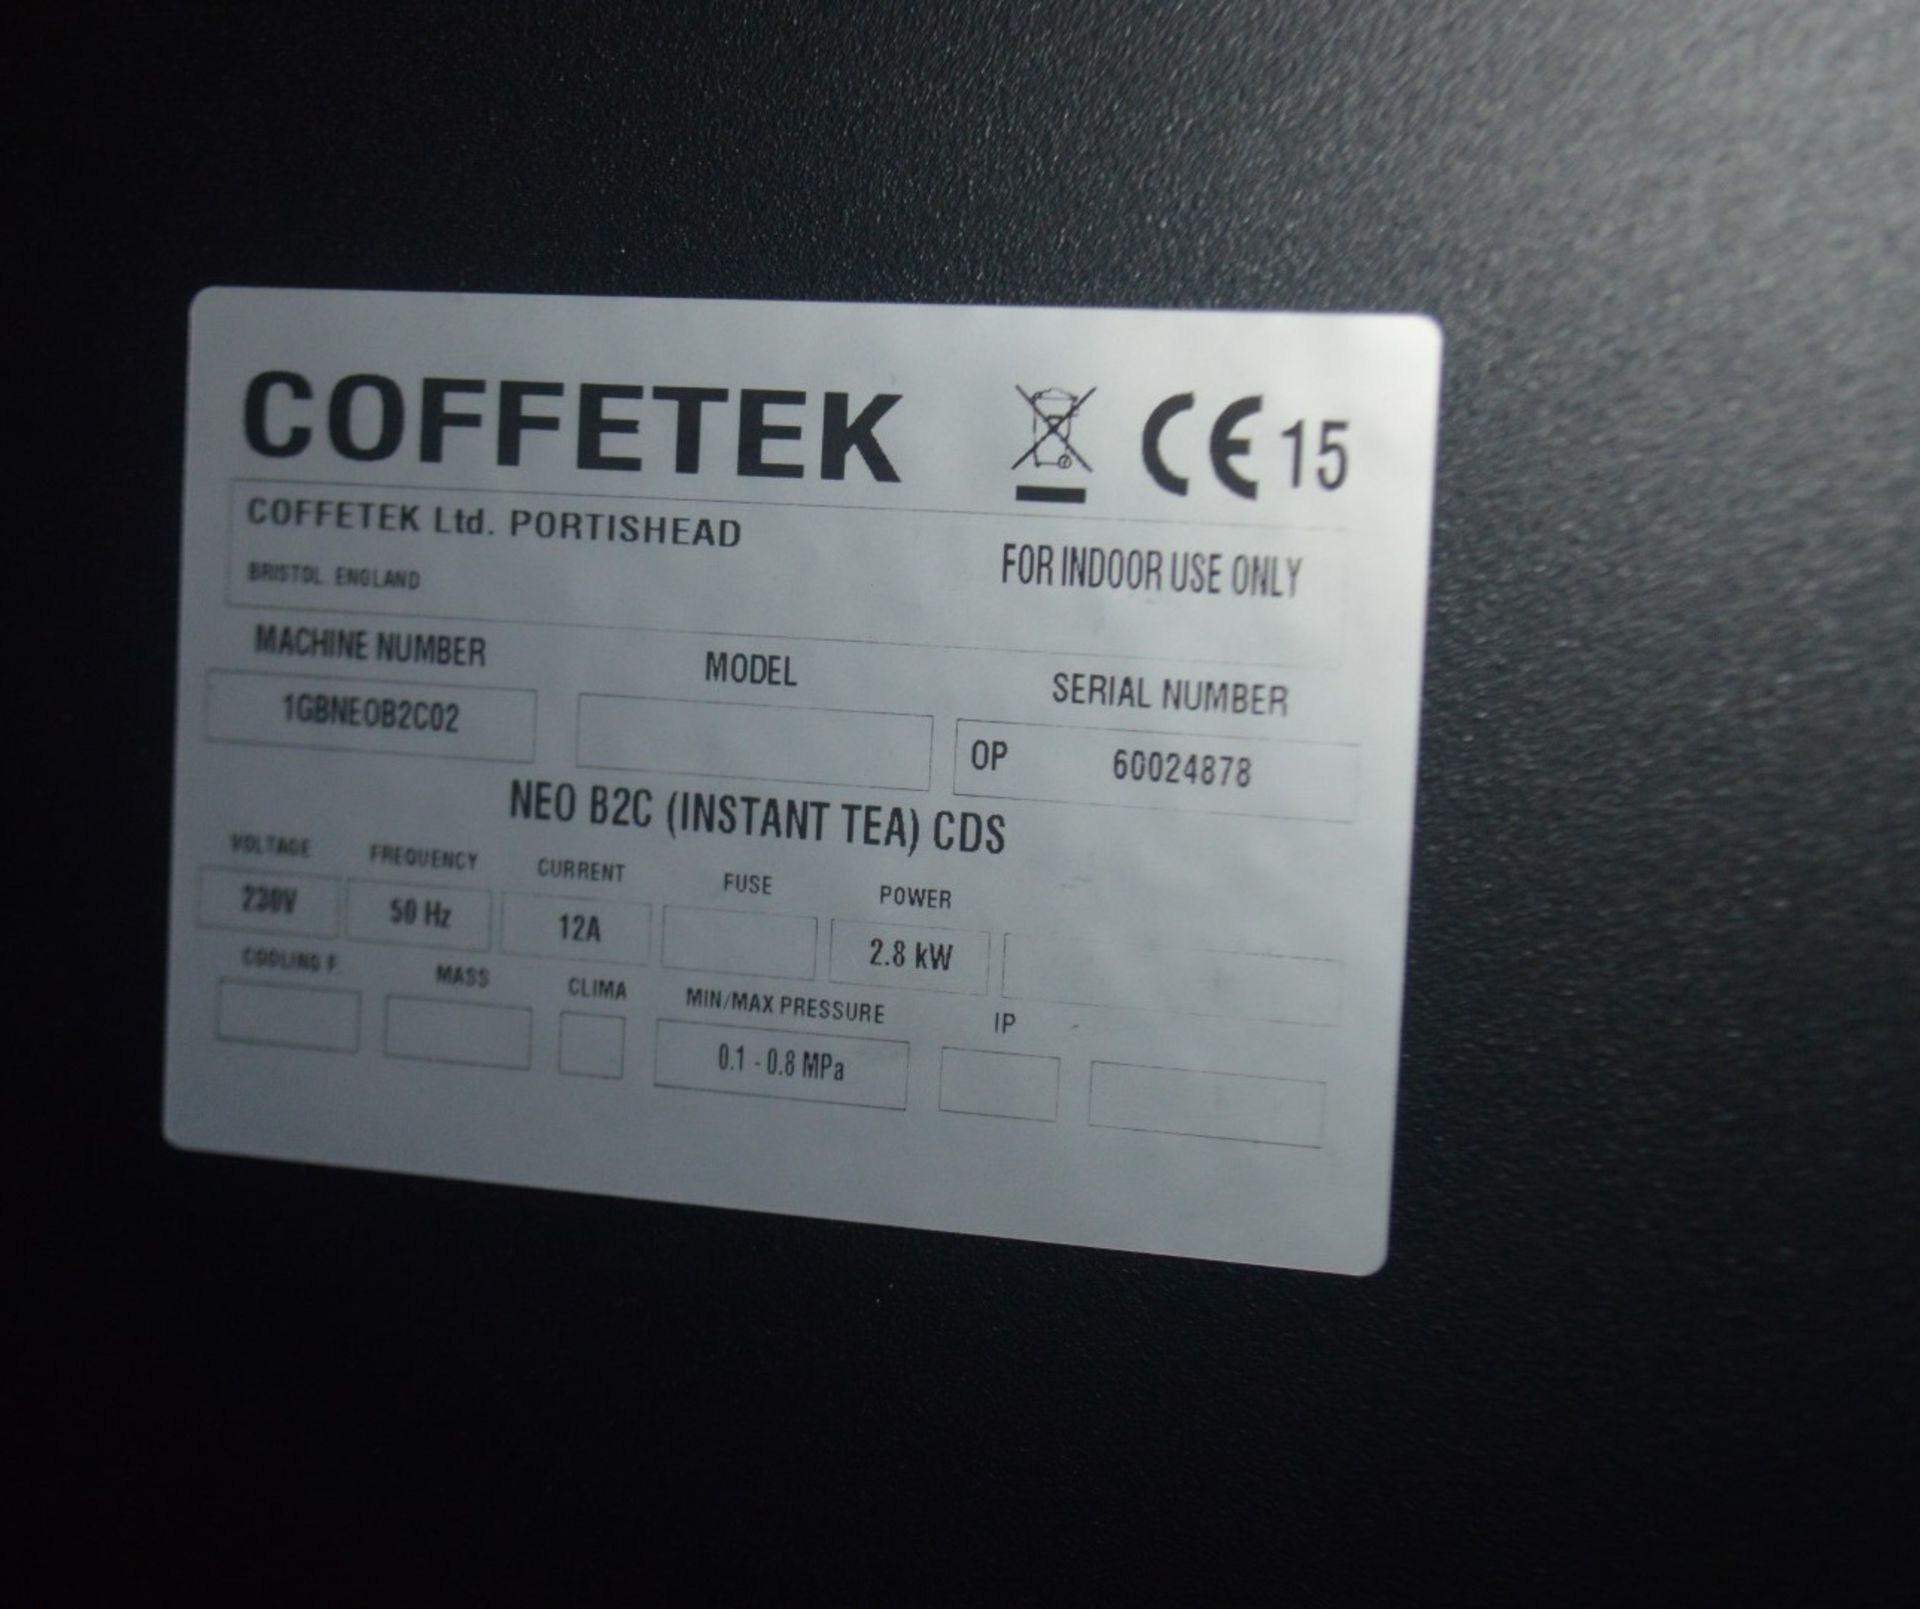 1 x COFFEETEK Touch Screen Instant Hot Drink Vending Machine - Model: Neo B2C (INSTANT TEA) CDS - Ve - Image 2 of 9